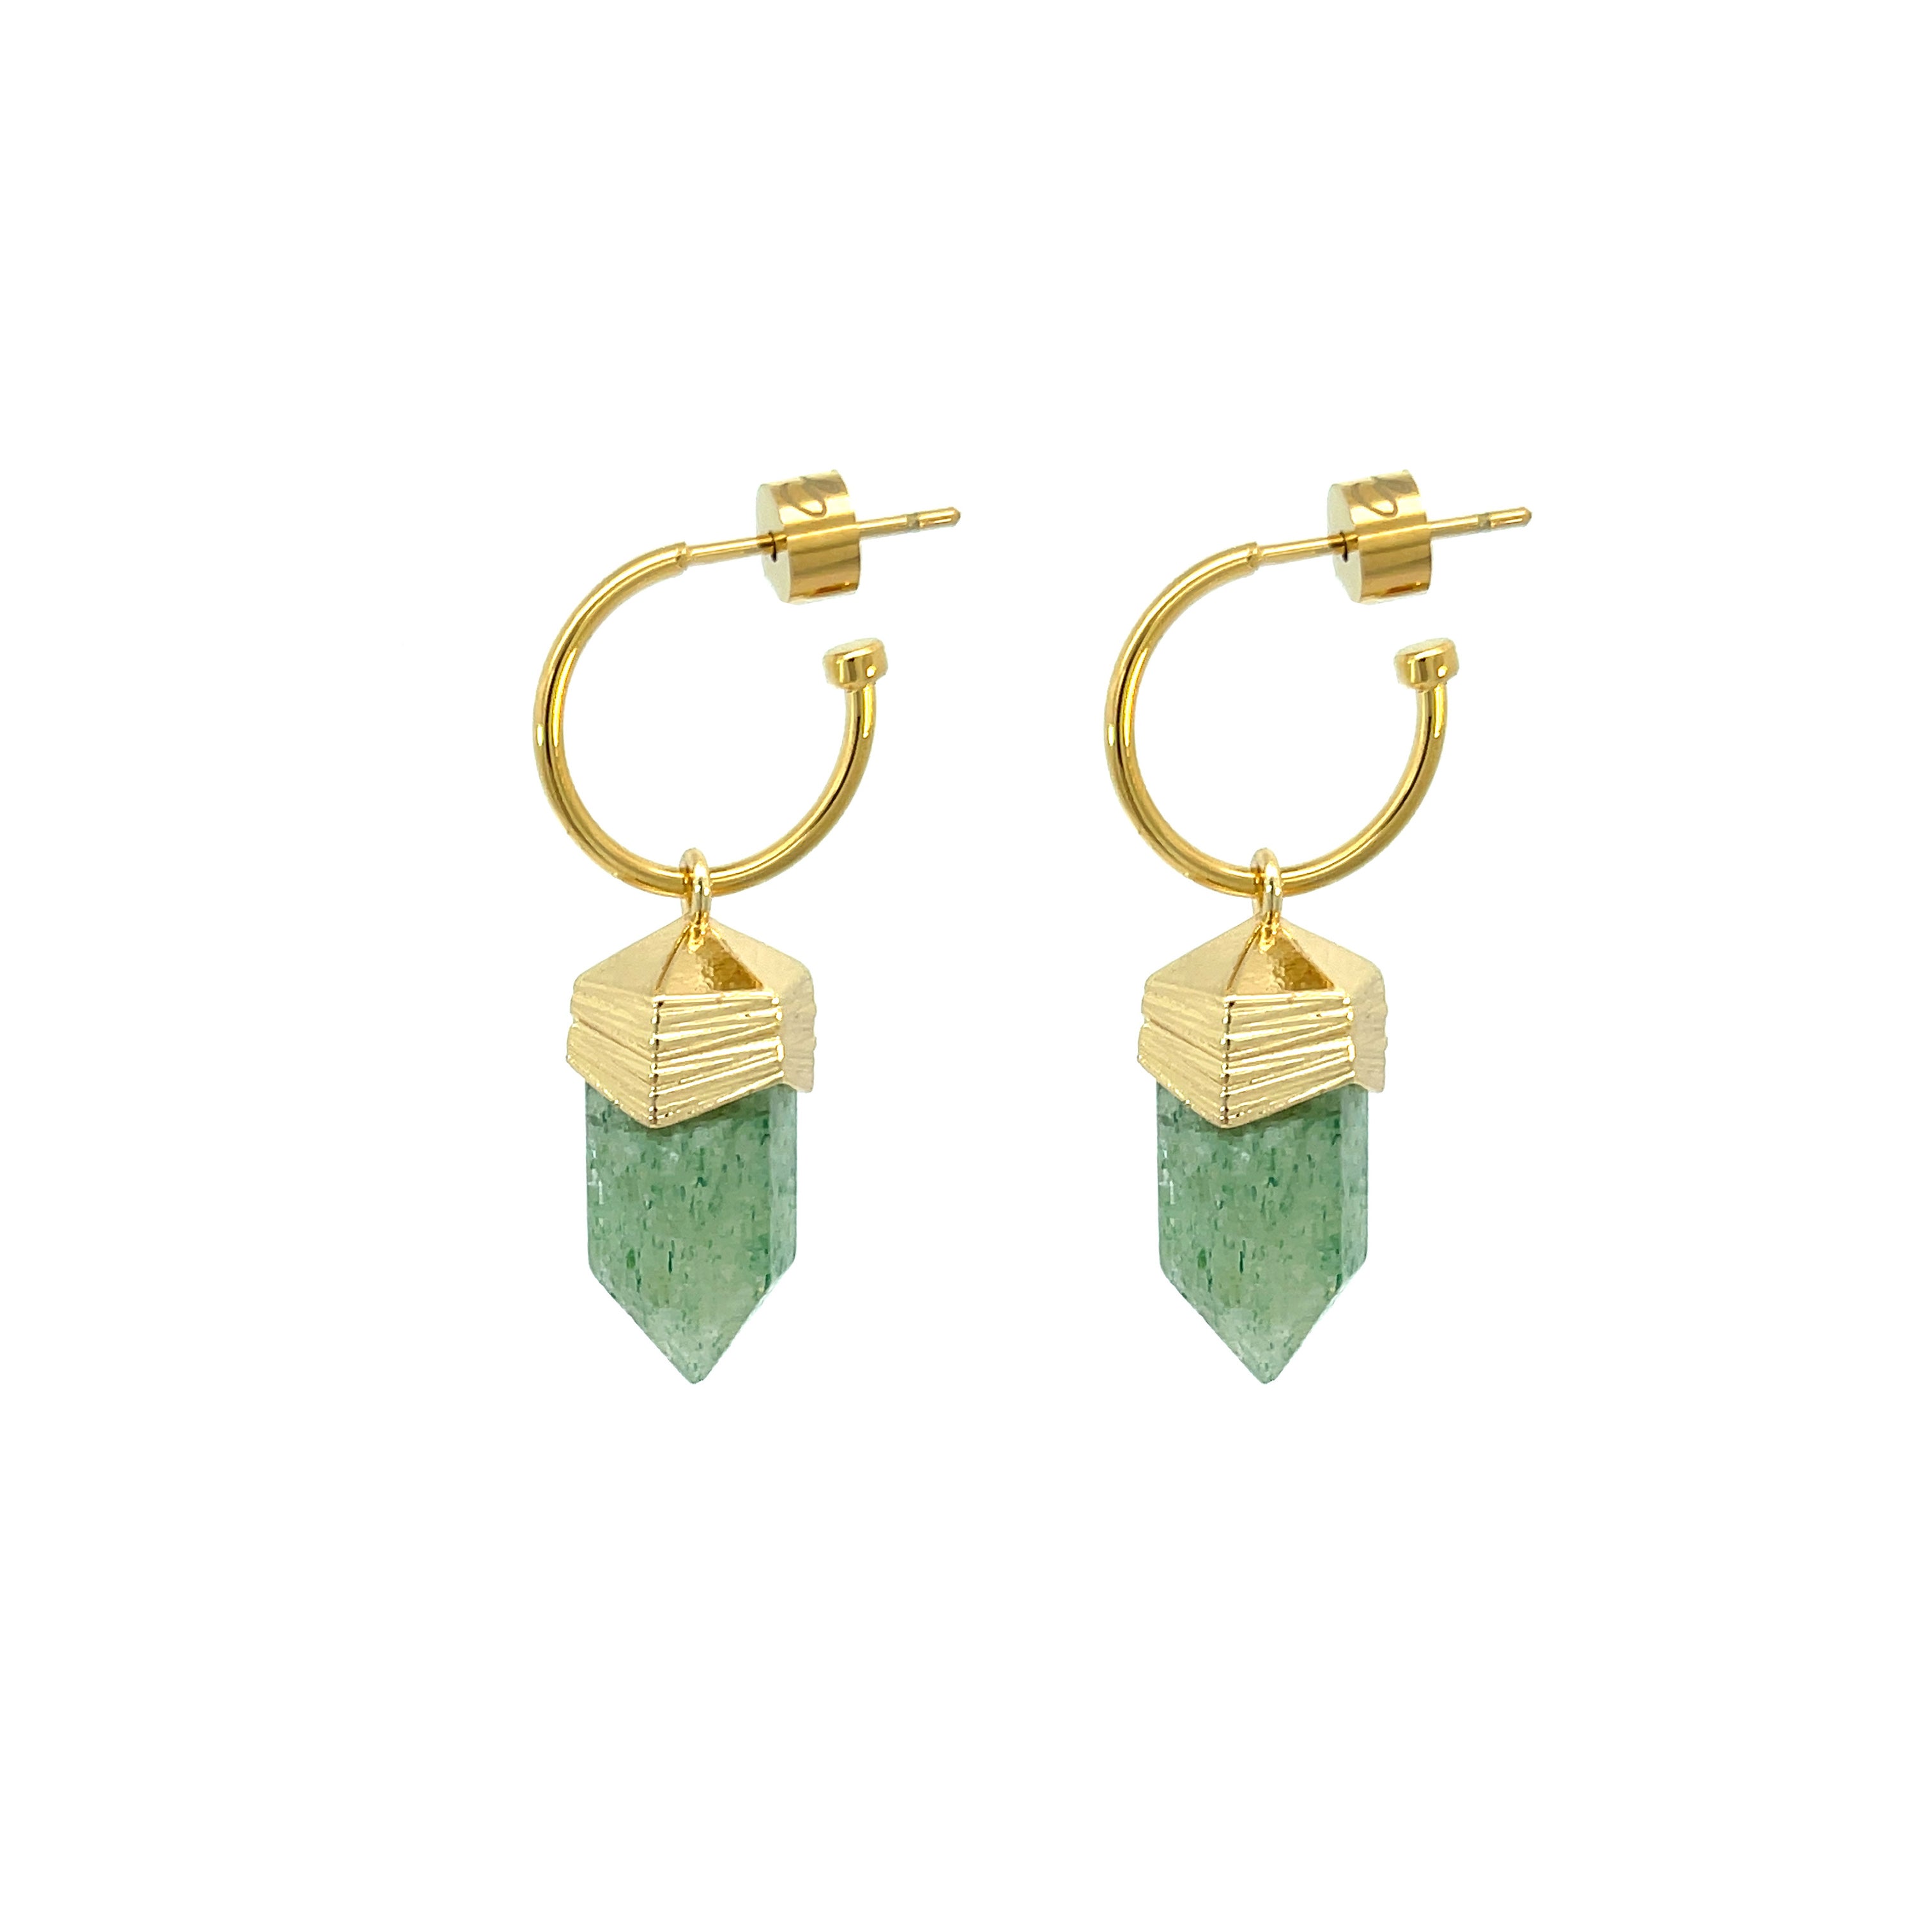 Amari Crystal Hexagonal Earrings - Green Moss Agate